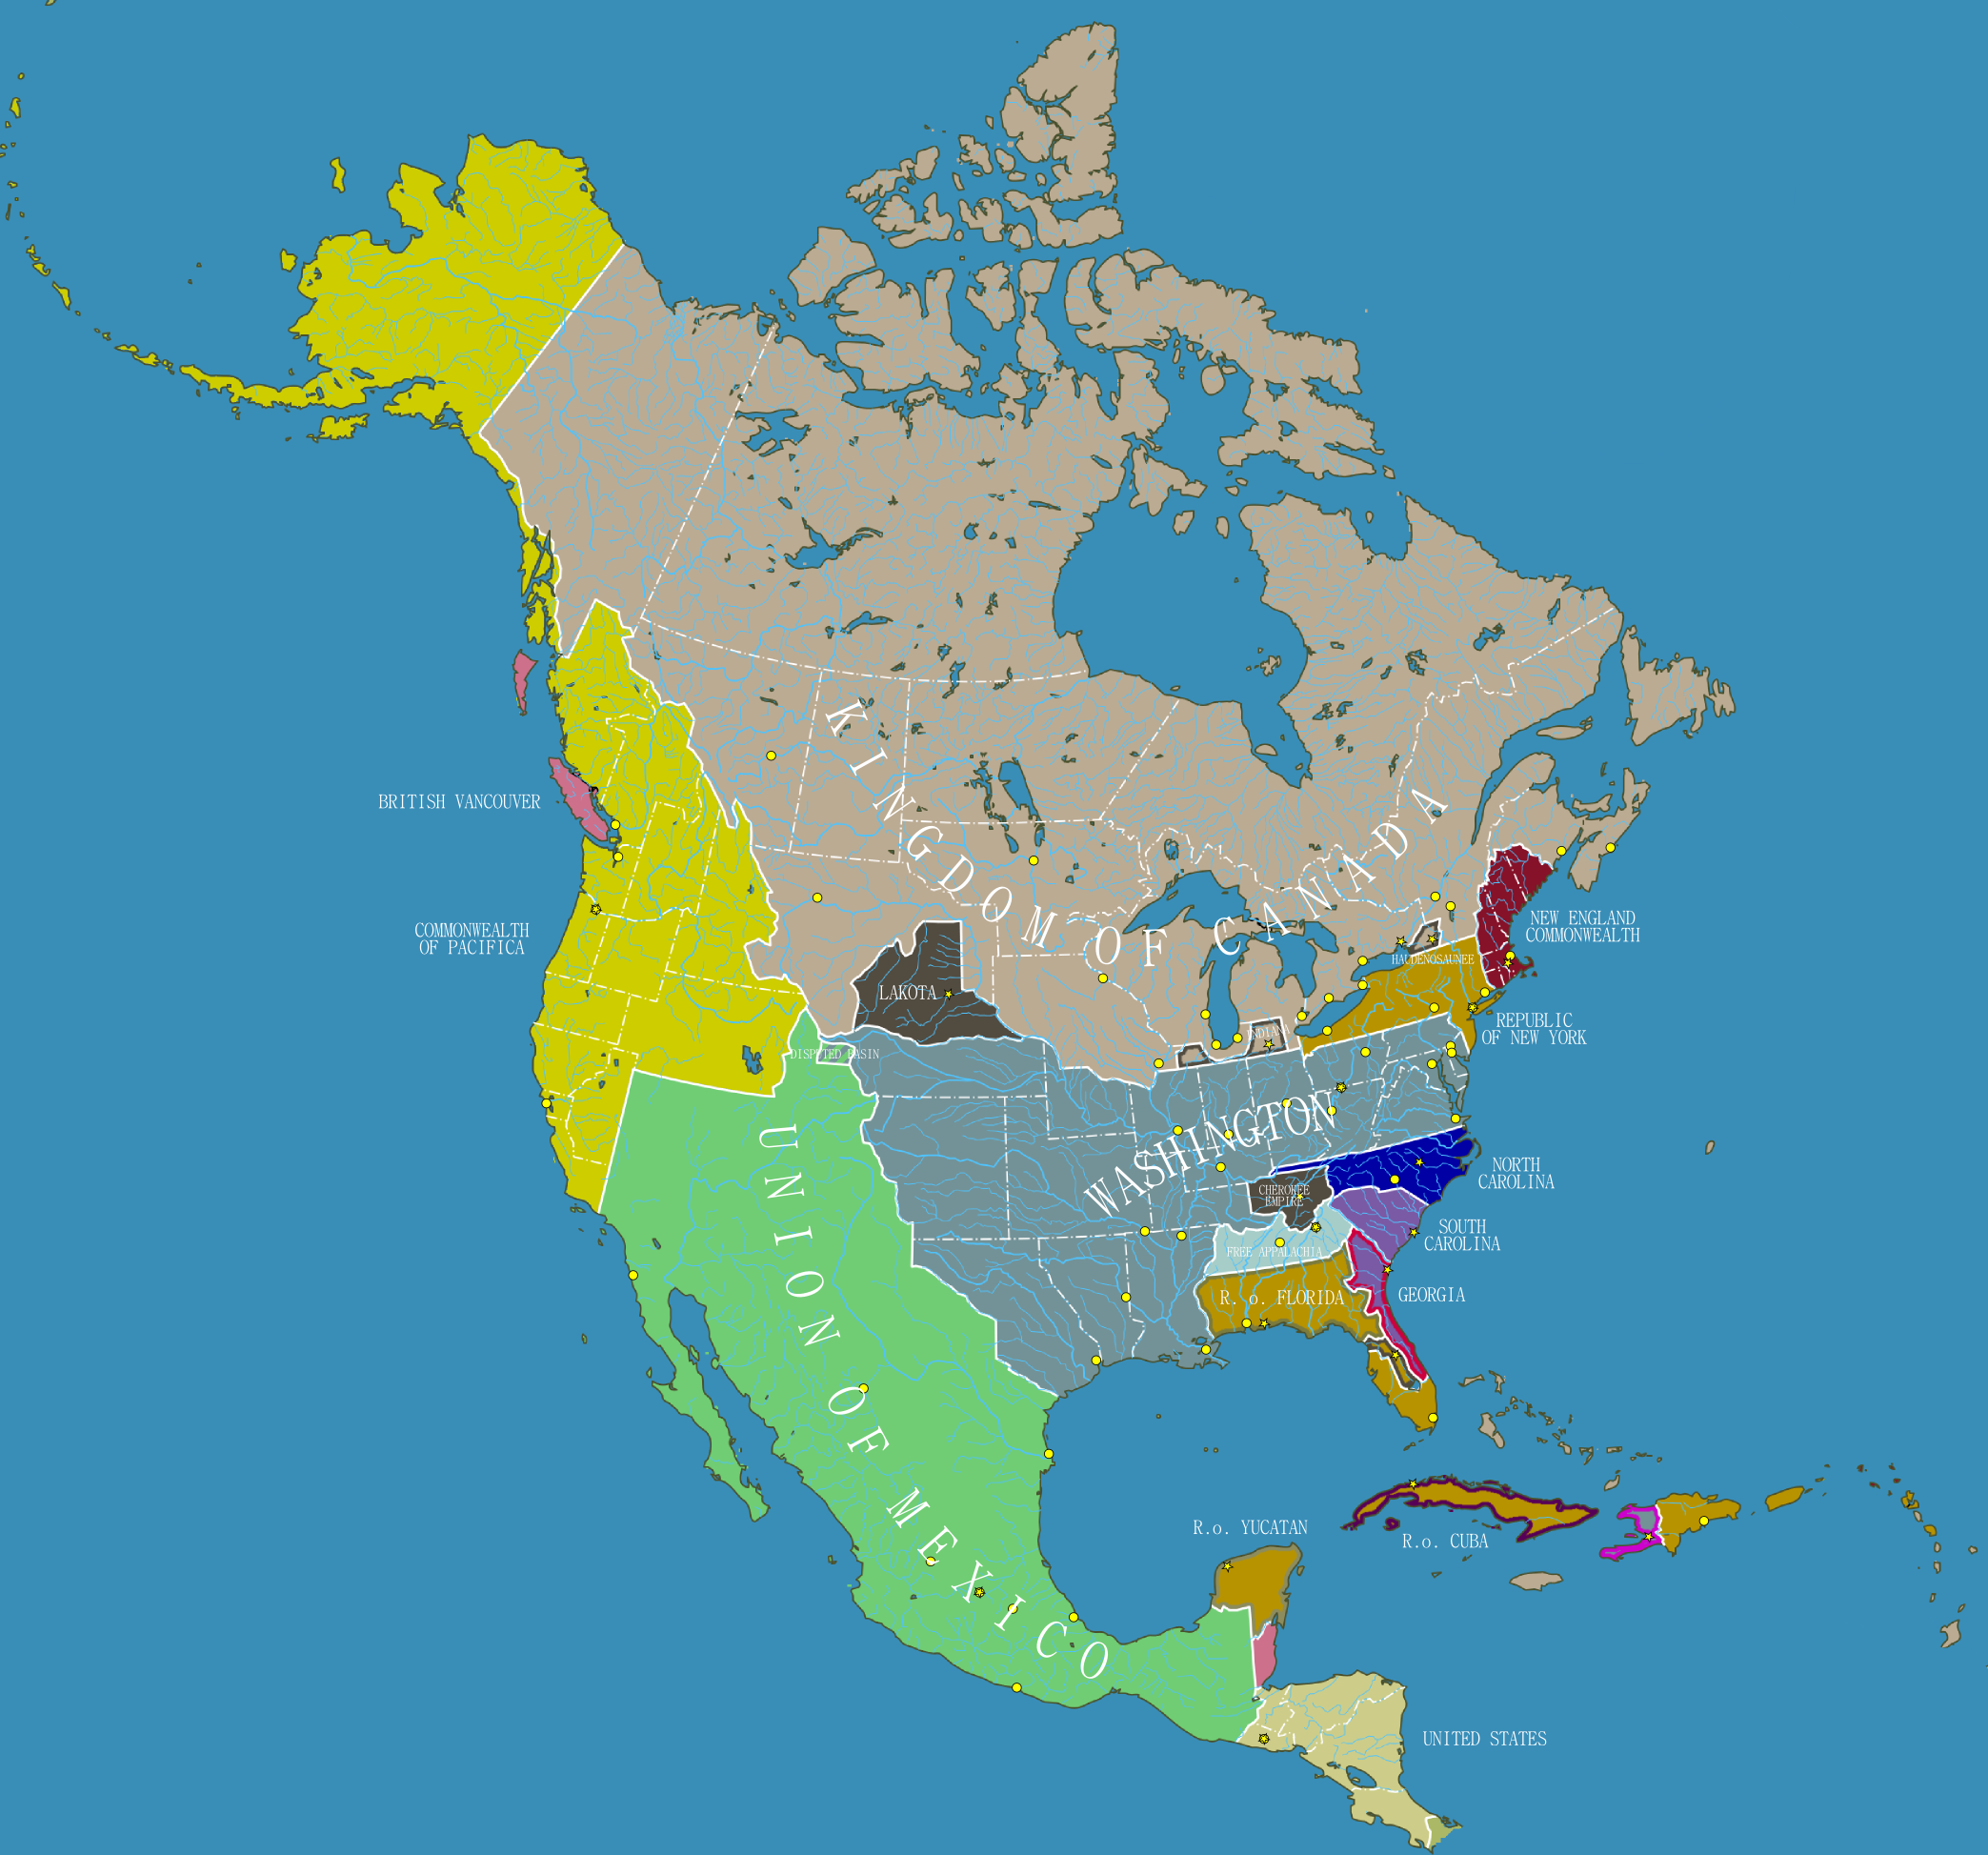 Границы материка Северная Америка. США на карте Северной Америки. Материк Северная Америка на карте со странами.